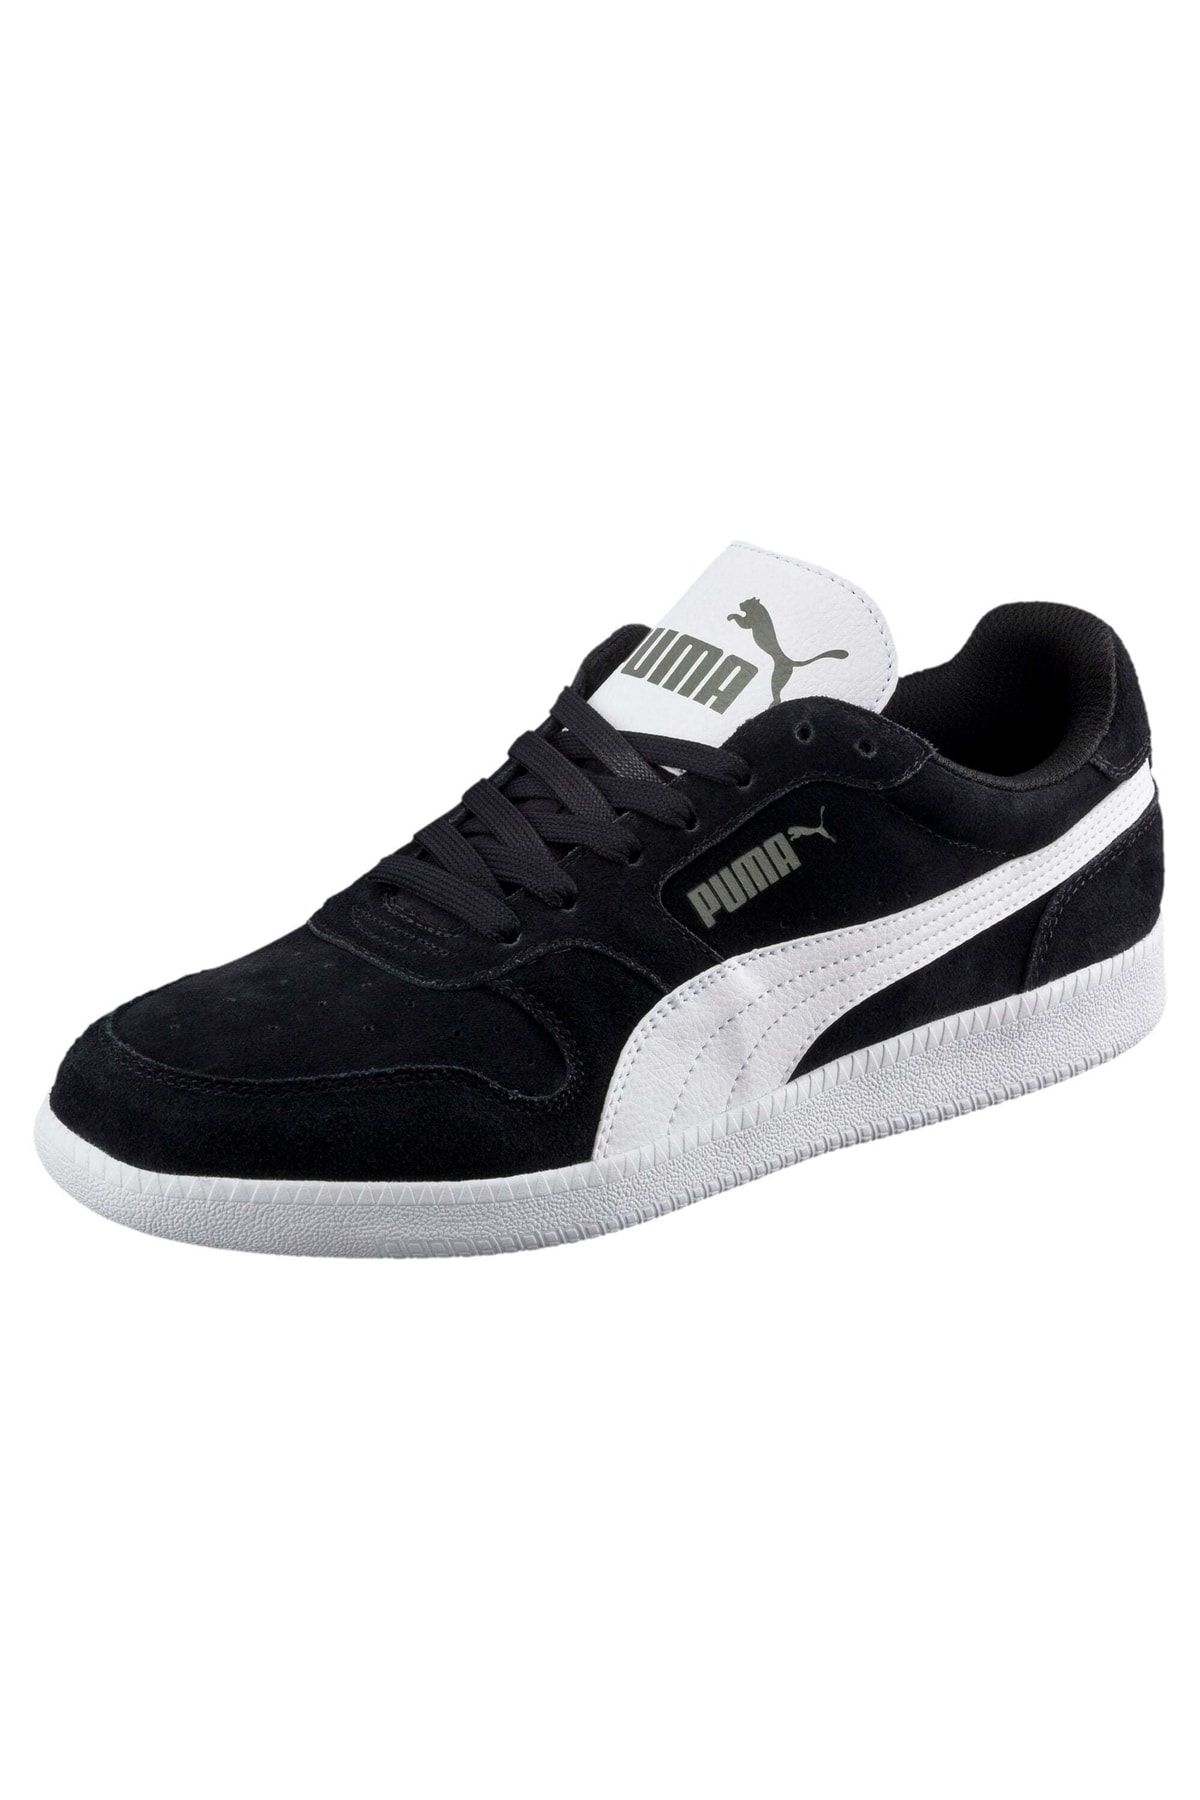 Puma ICRA TRAINER SD Siyah Beyaz Erkek Sneaker 100222672